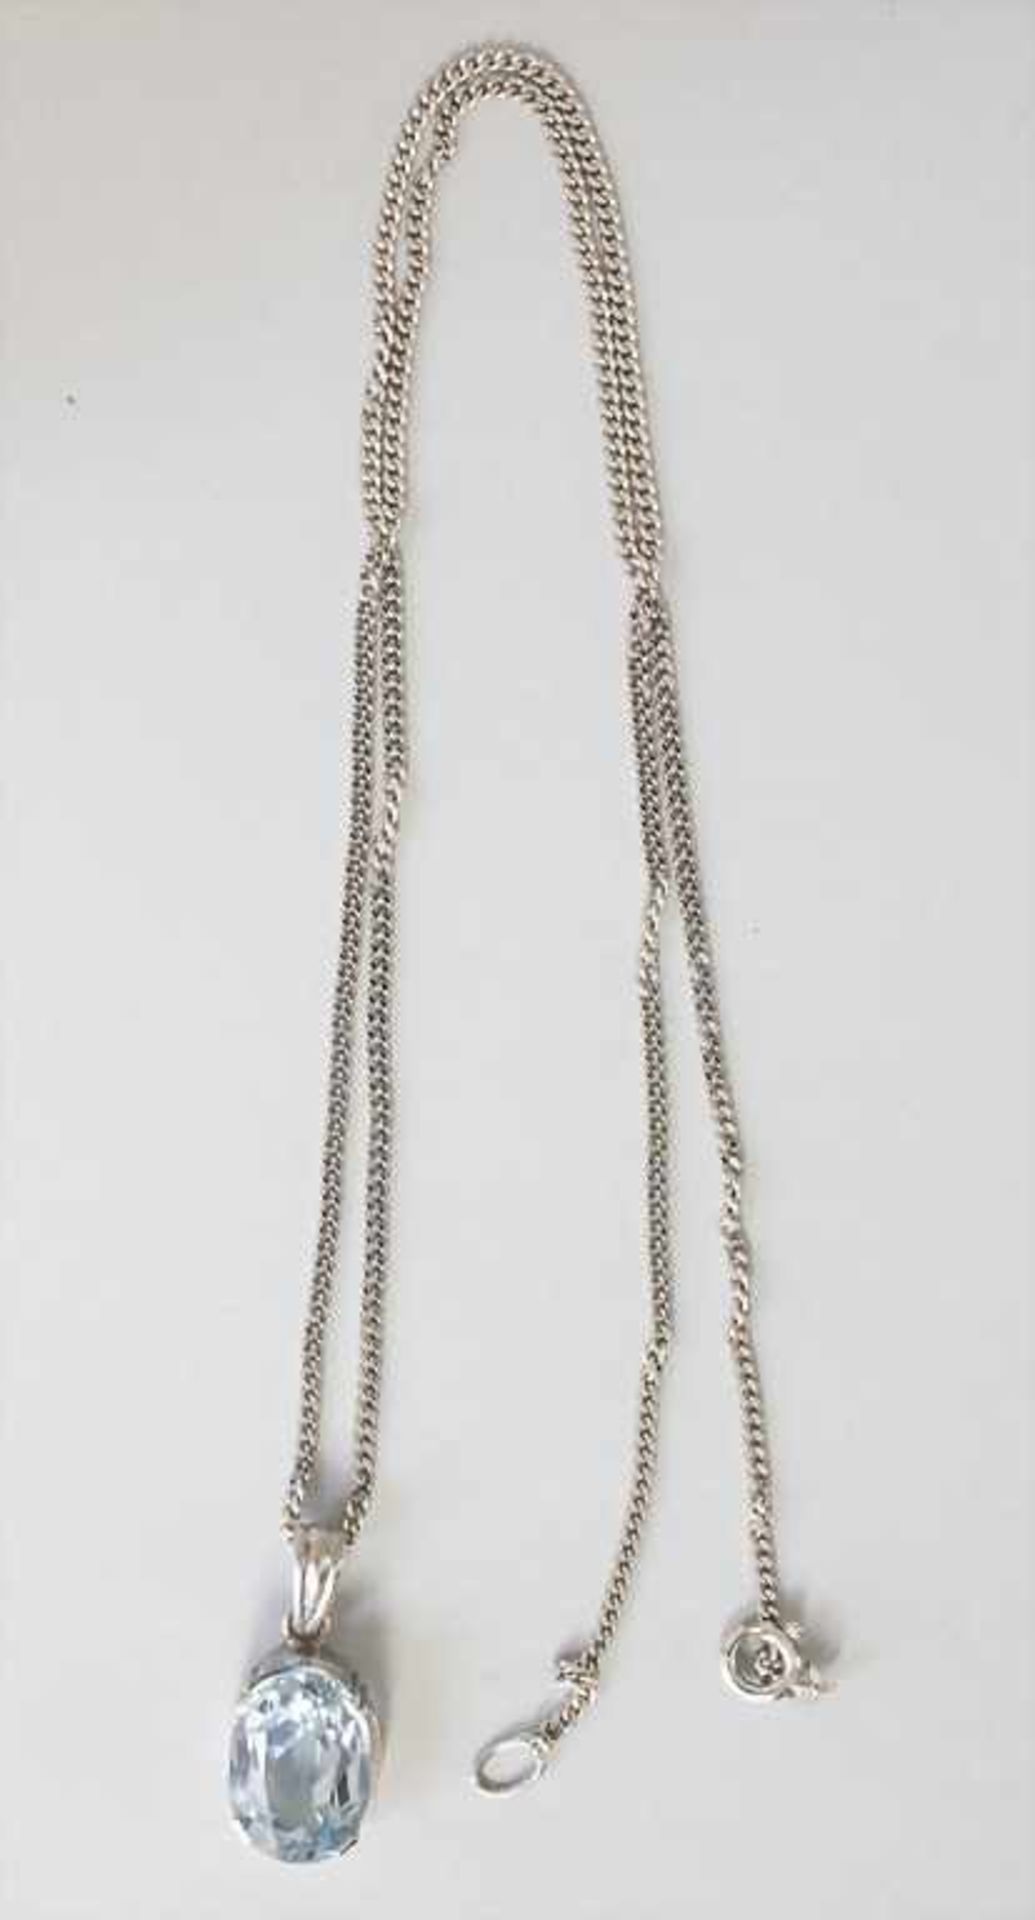 Goldkette mit Aquamarinanhänger / A gold necklace with aquamarin pendant - Bild 4 aus 4